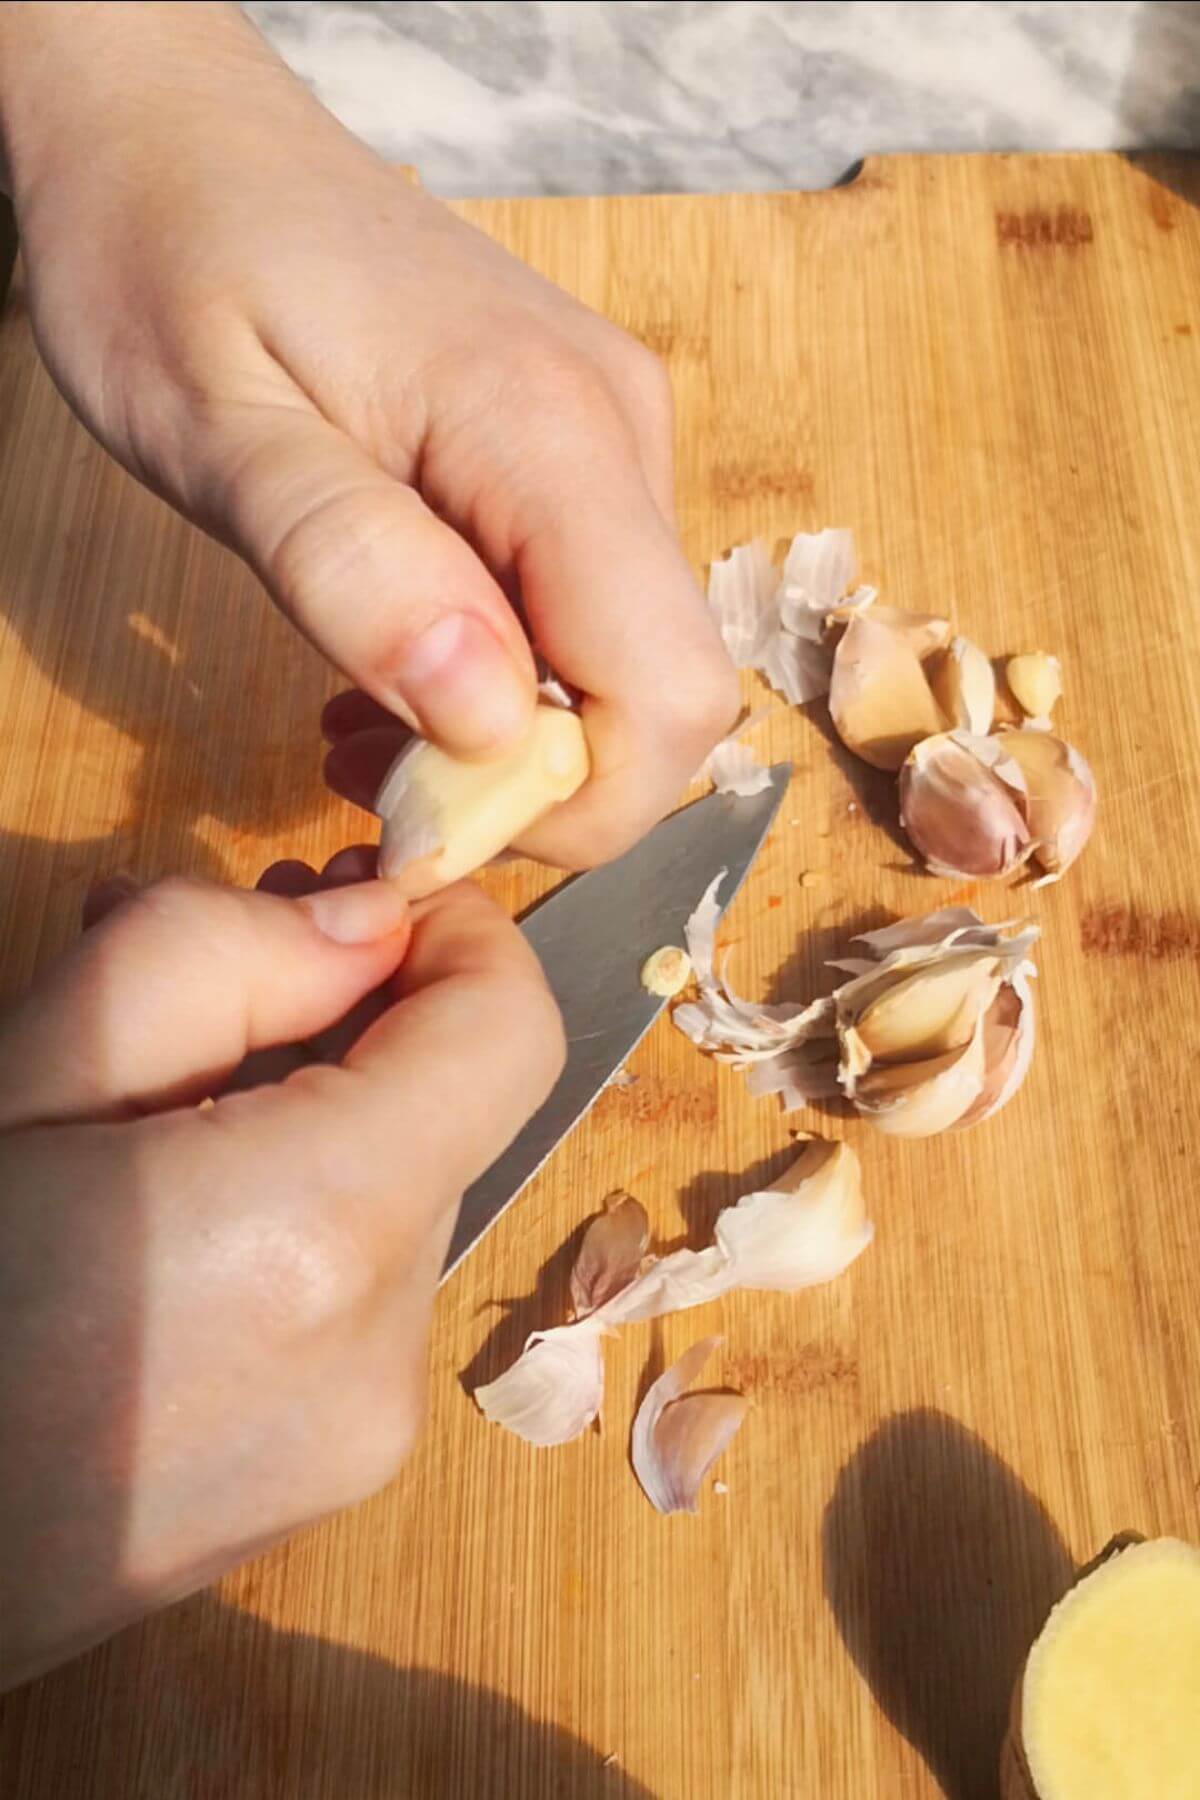 Hand peeling garlic cloves on a wooden board.